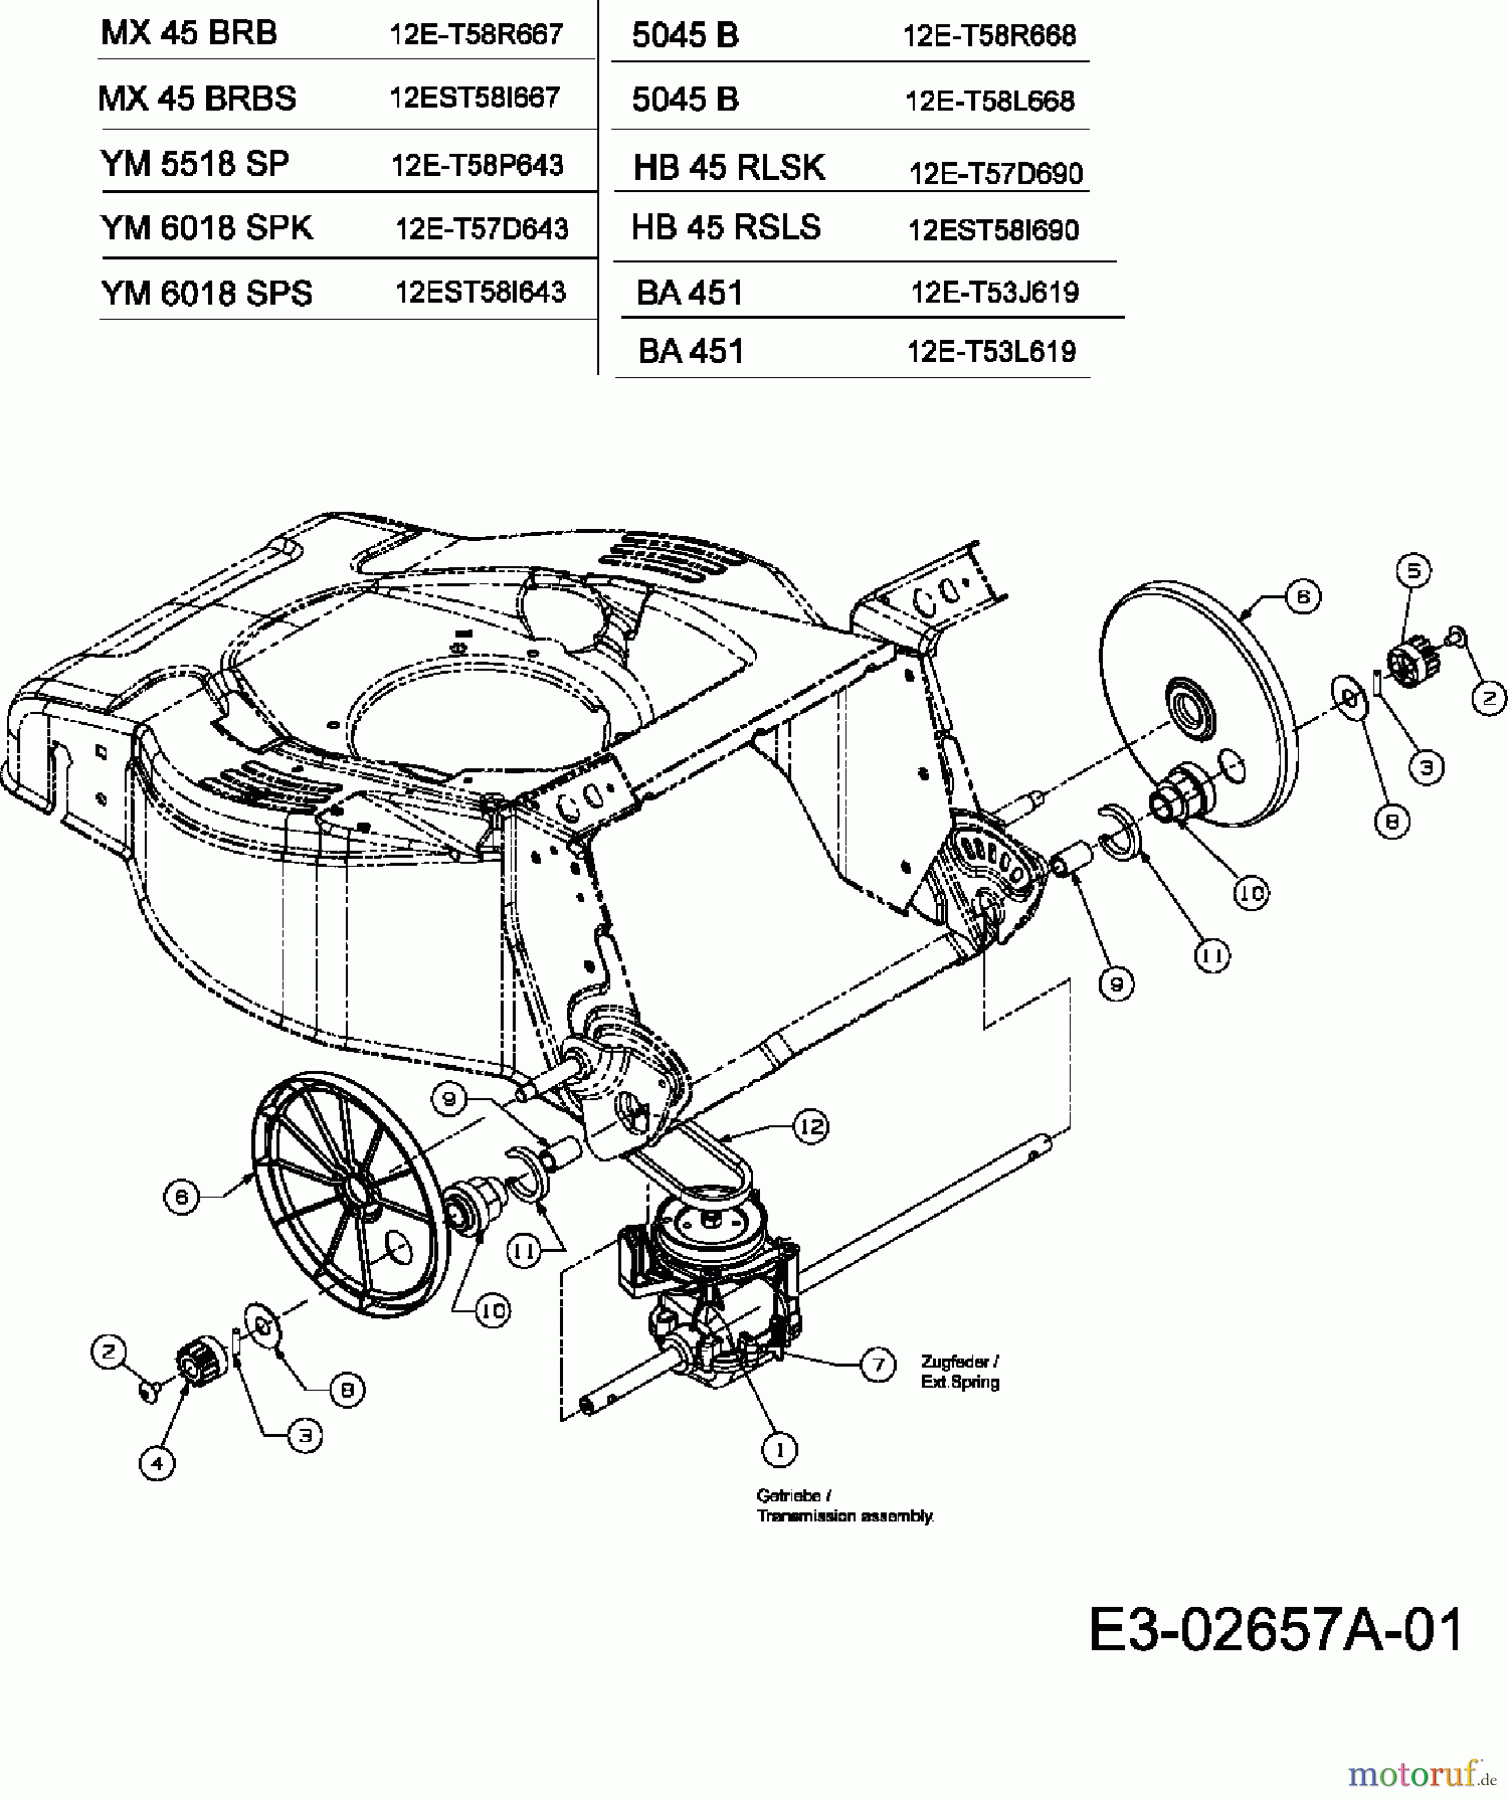  Mac Allister Petrol mower self propelled 5045 B 12E-T58L668  (2006) Gearbox